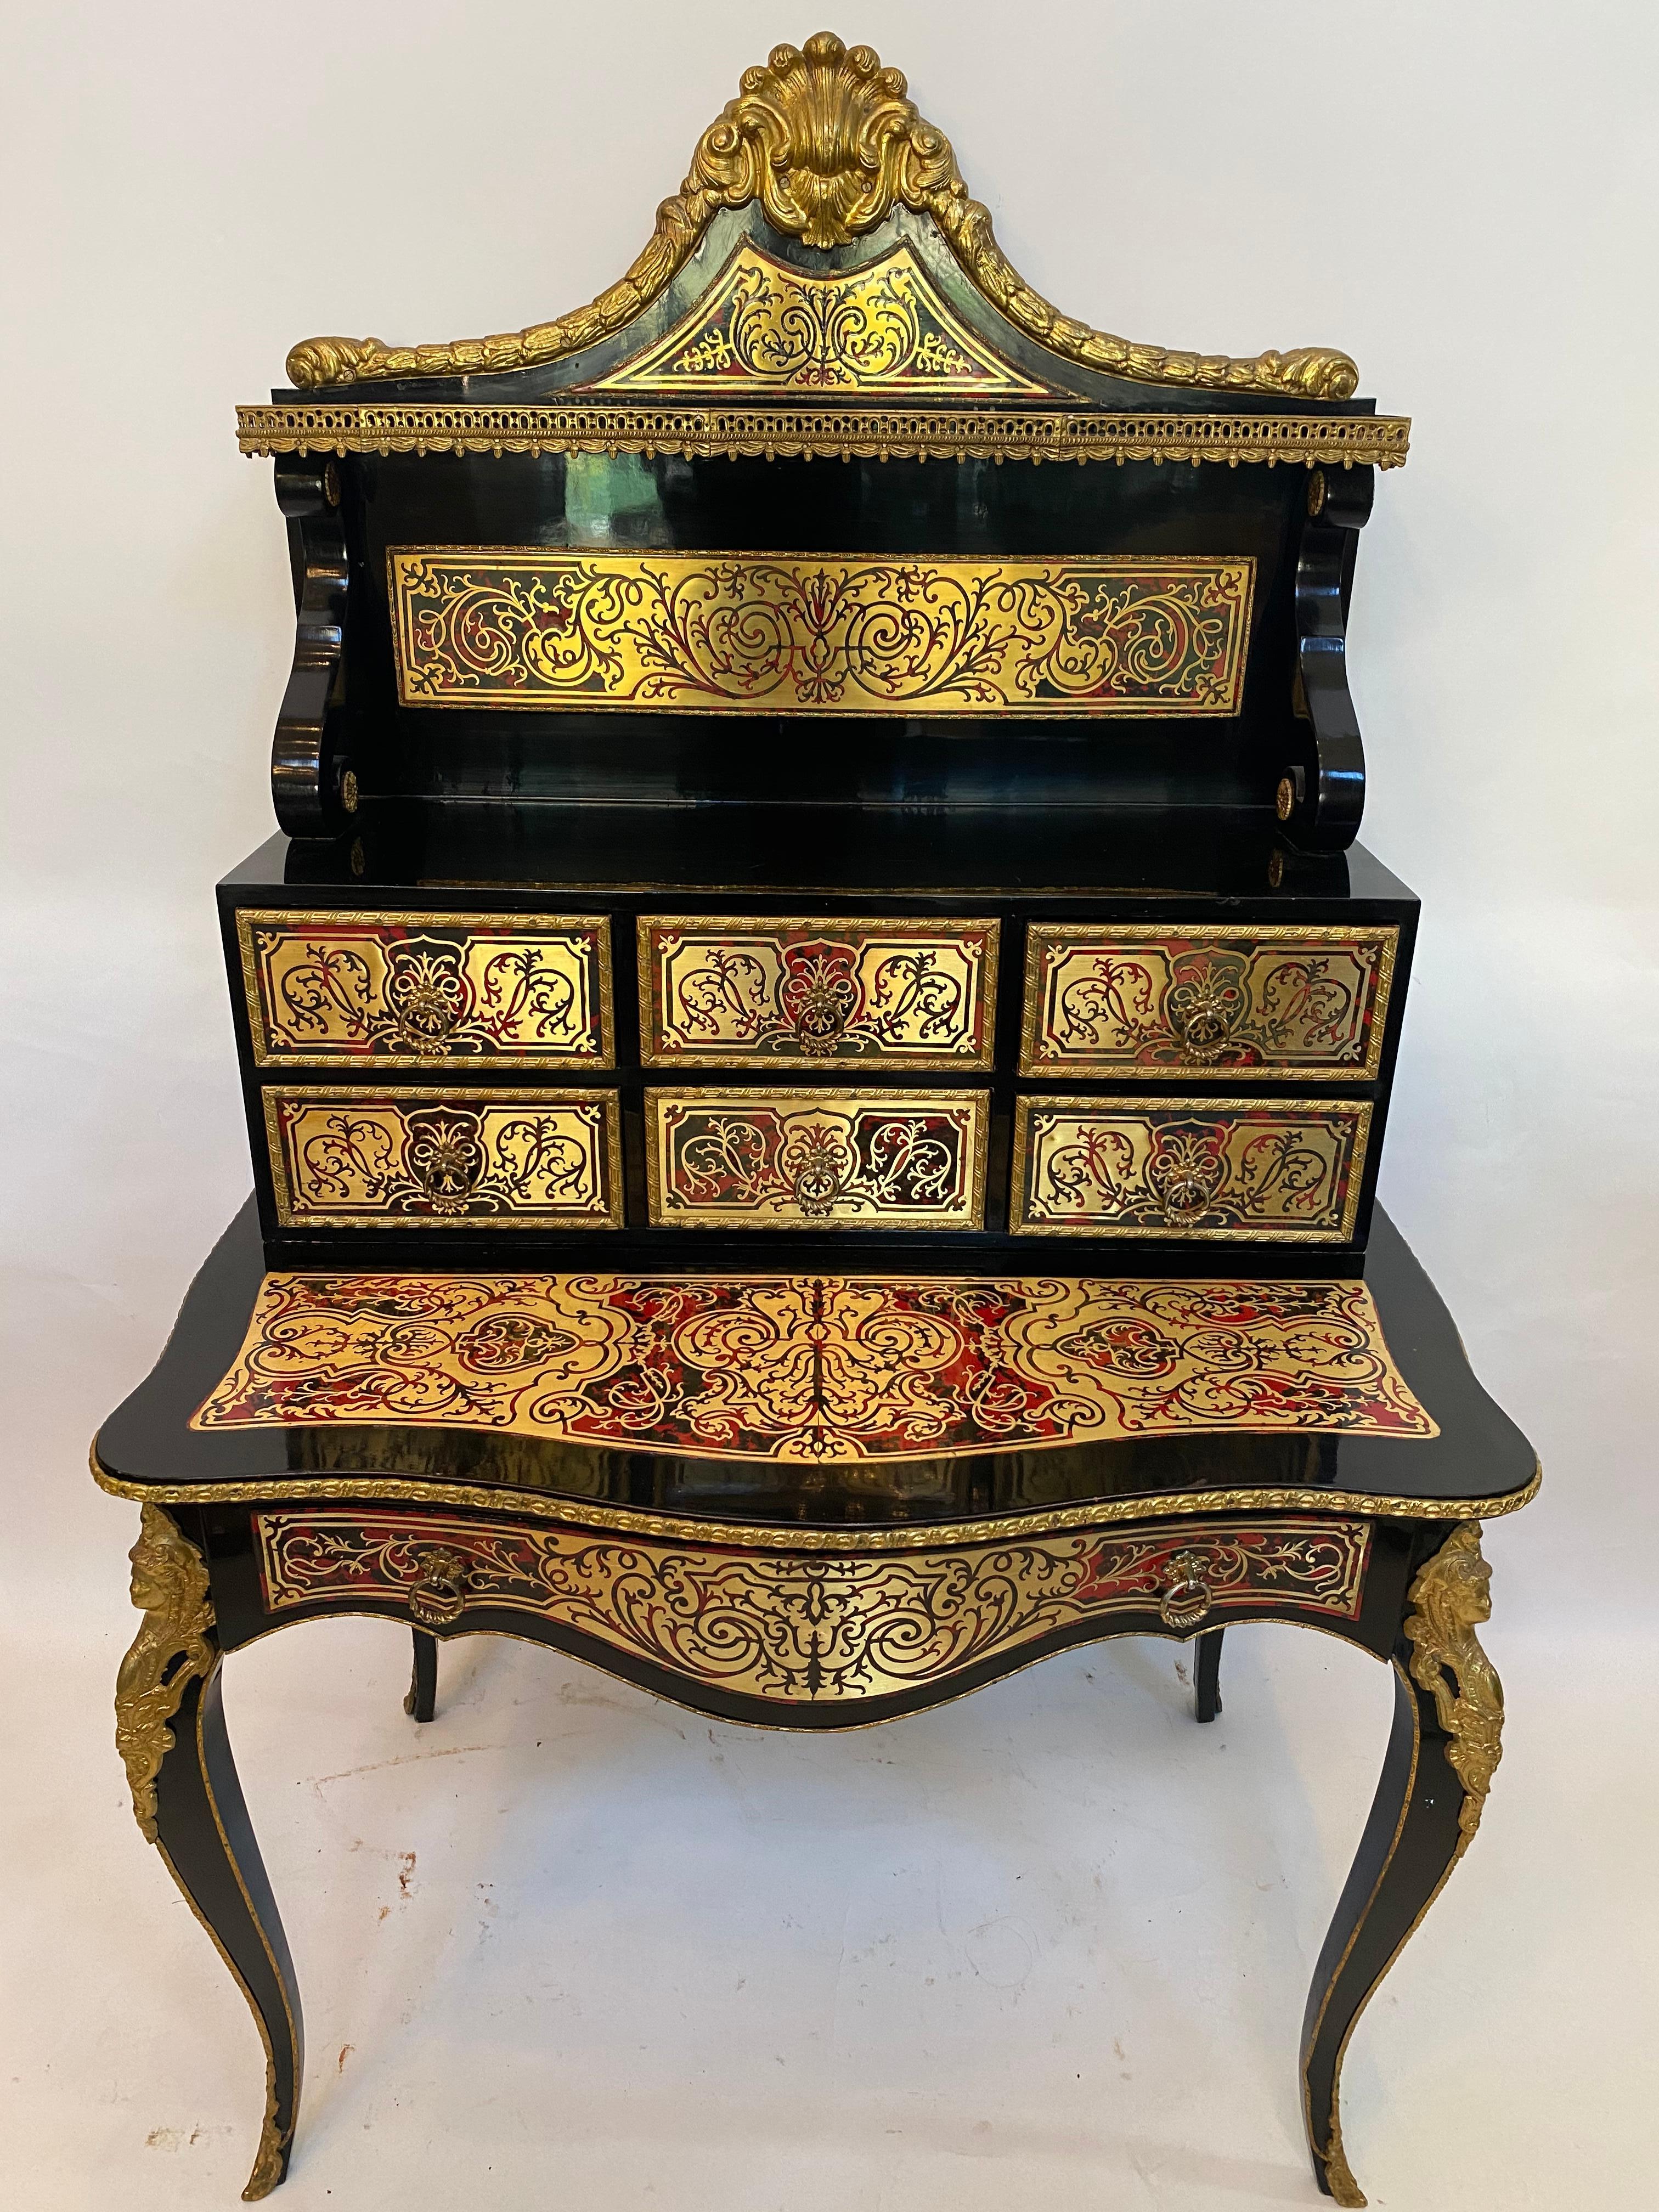 American Classical French Louis XV Style Gilt Bronze-Mounted Escritoire Desk For Sale